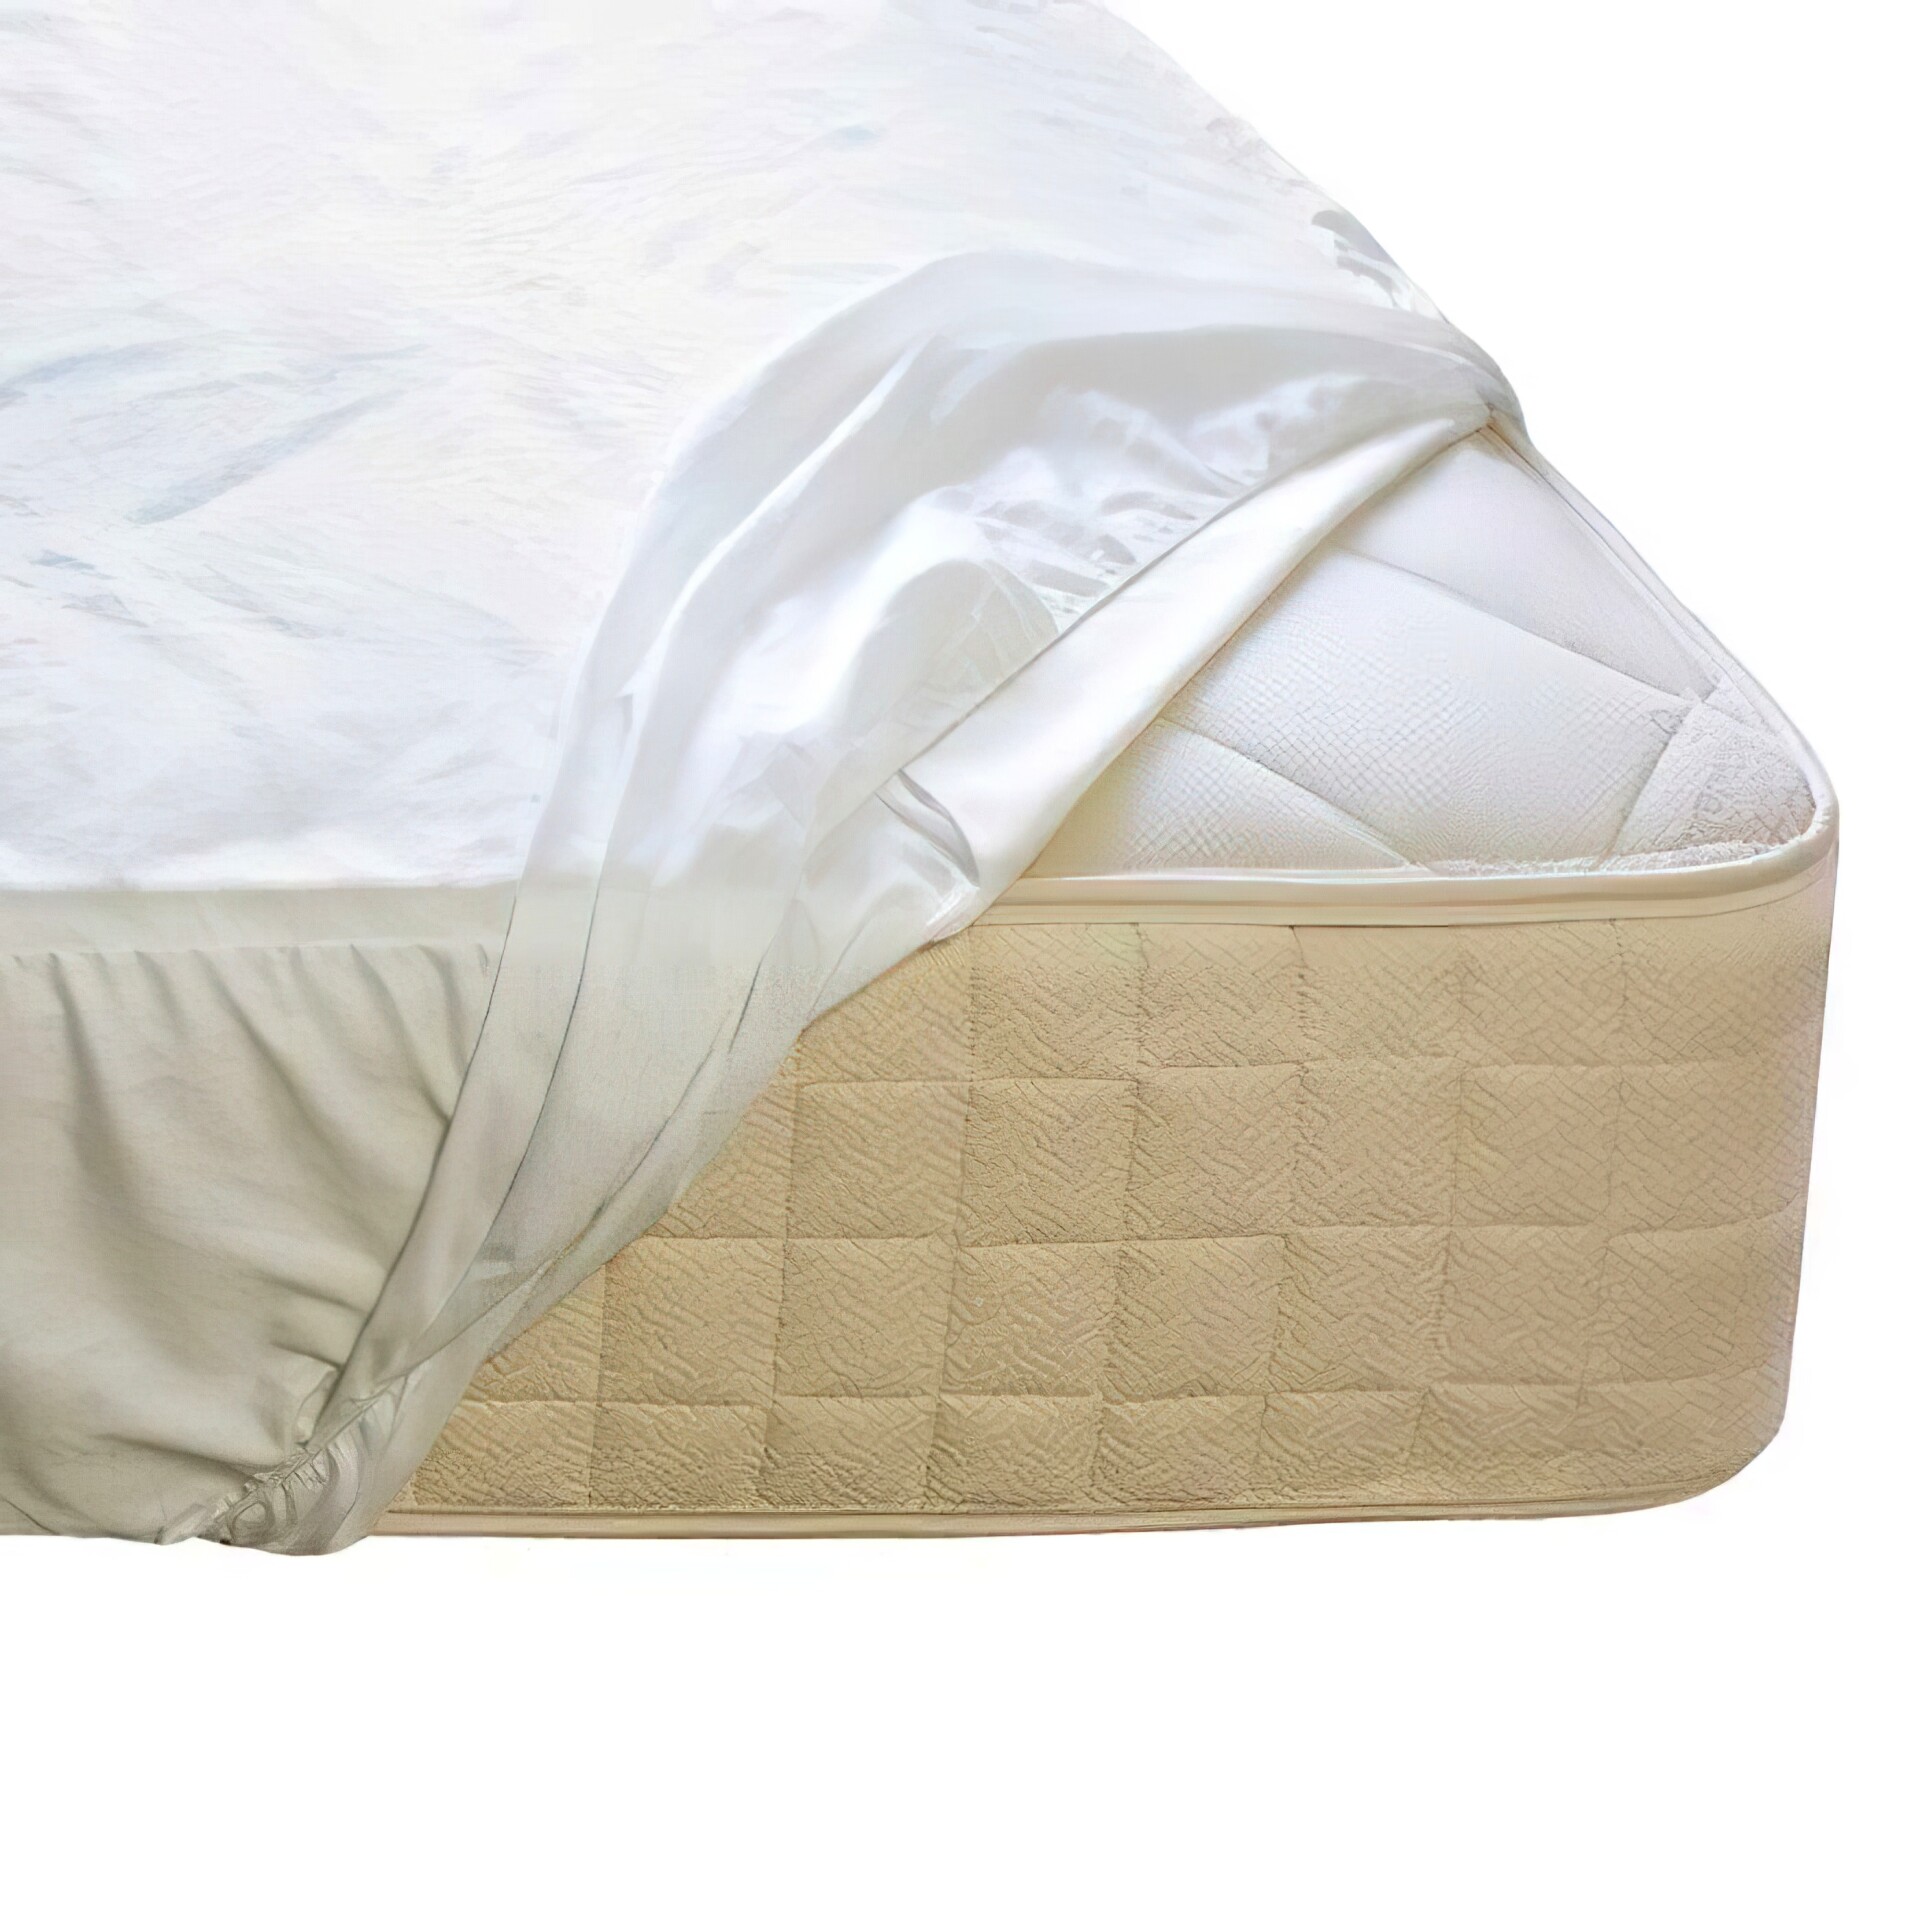 https://www.thecleanbedroom.com/wp-content/uploads/products/22049/naturepedic-organic-waterproof-mattress-protector--22049-.jpg